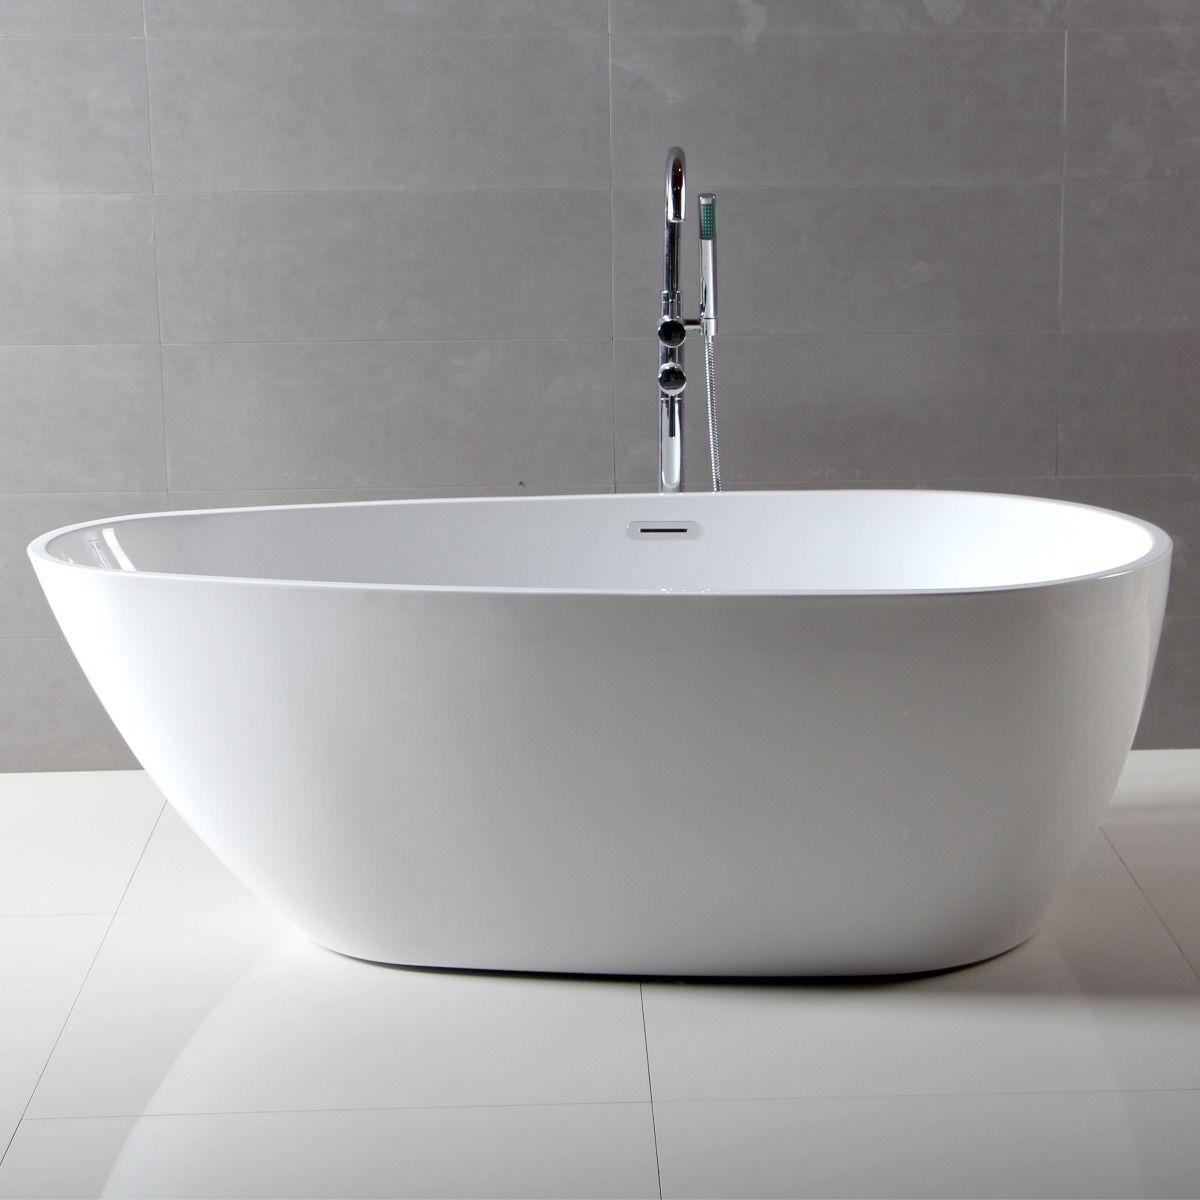 ALFI brand AB8861 59 Inch White Oval Acrylic Free Standing Soaking Bathtub - Elite Vitality